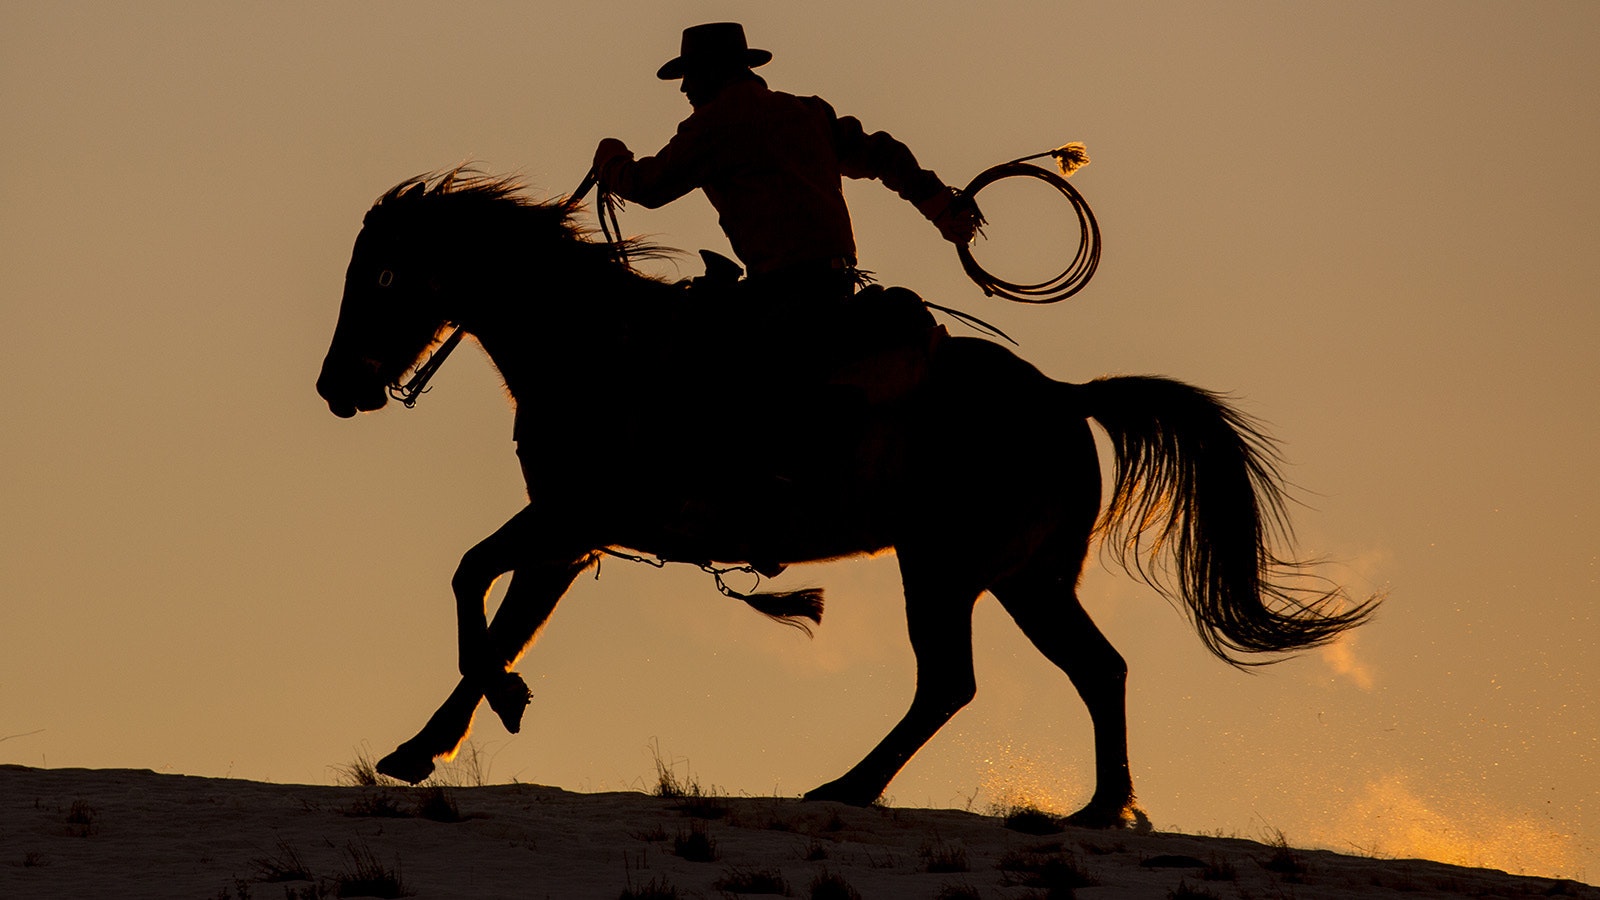 Cowboy silhouett 1 13 24